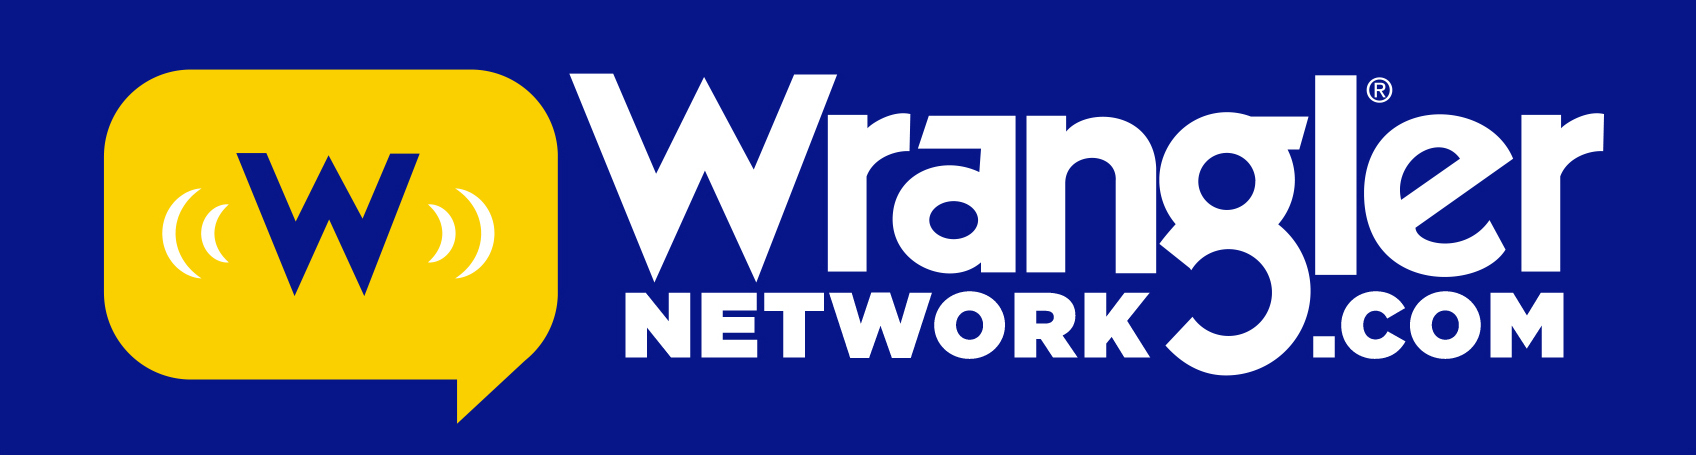 Wrangler® Jeans, Universal Music Group Nashville Pen Content Agreement |  Business Wire